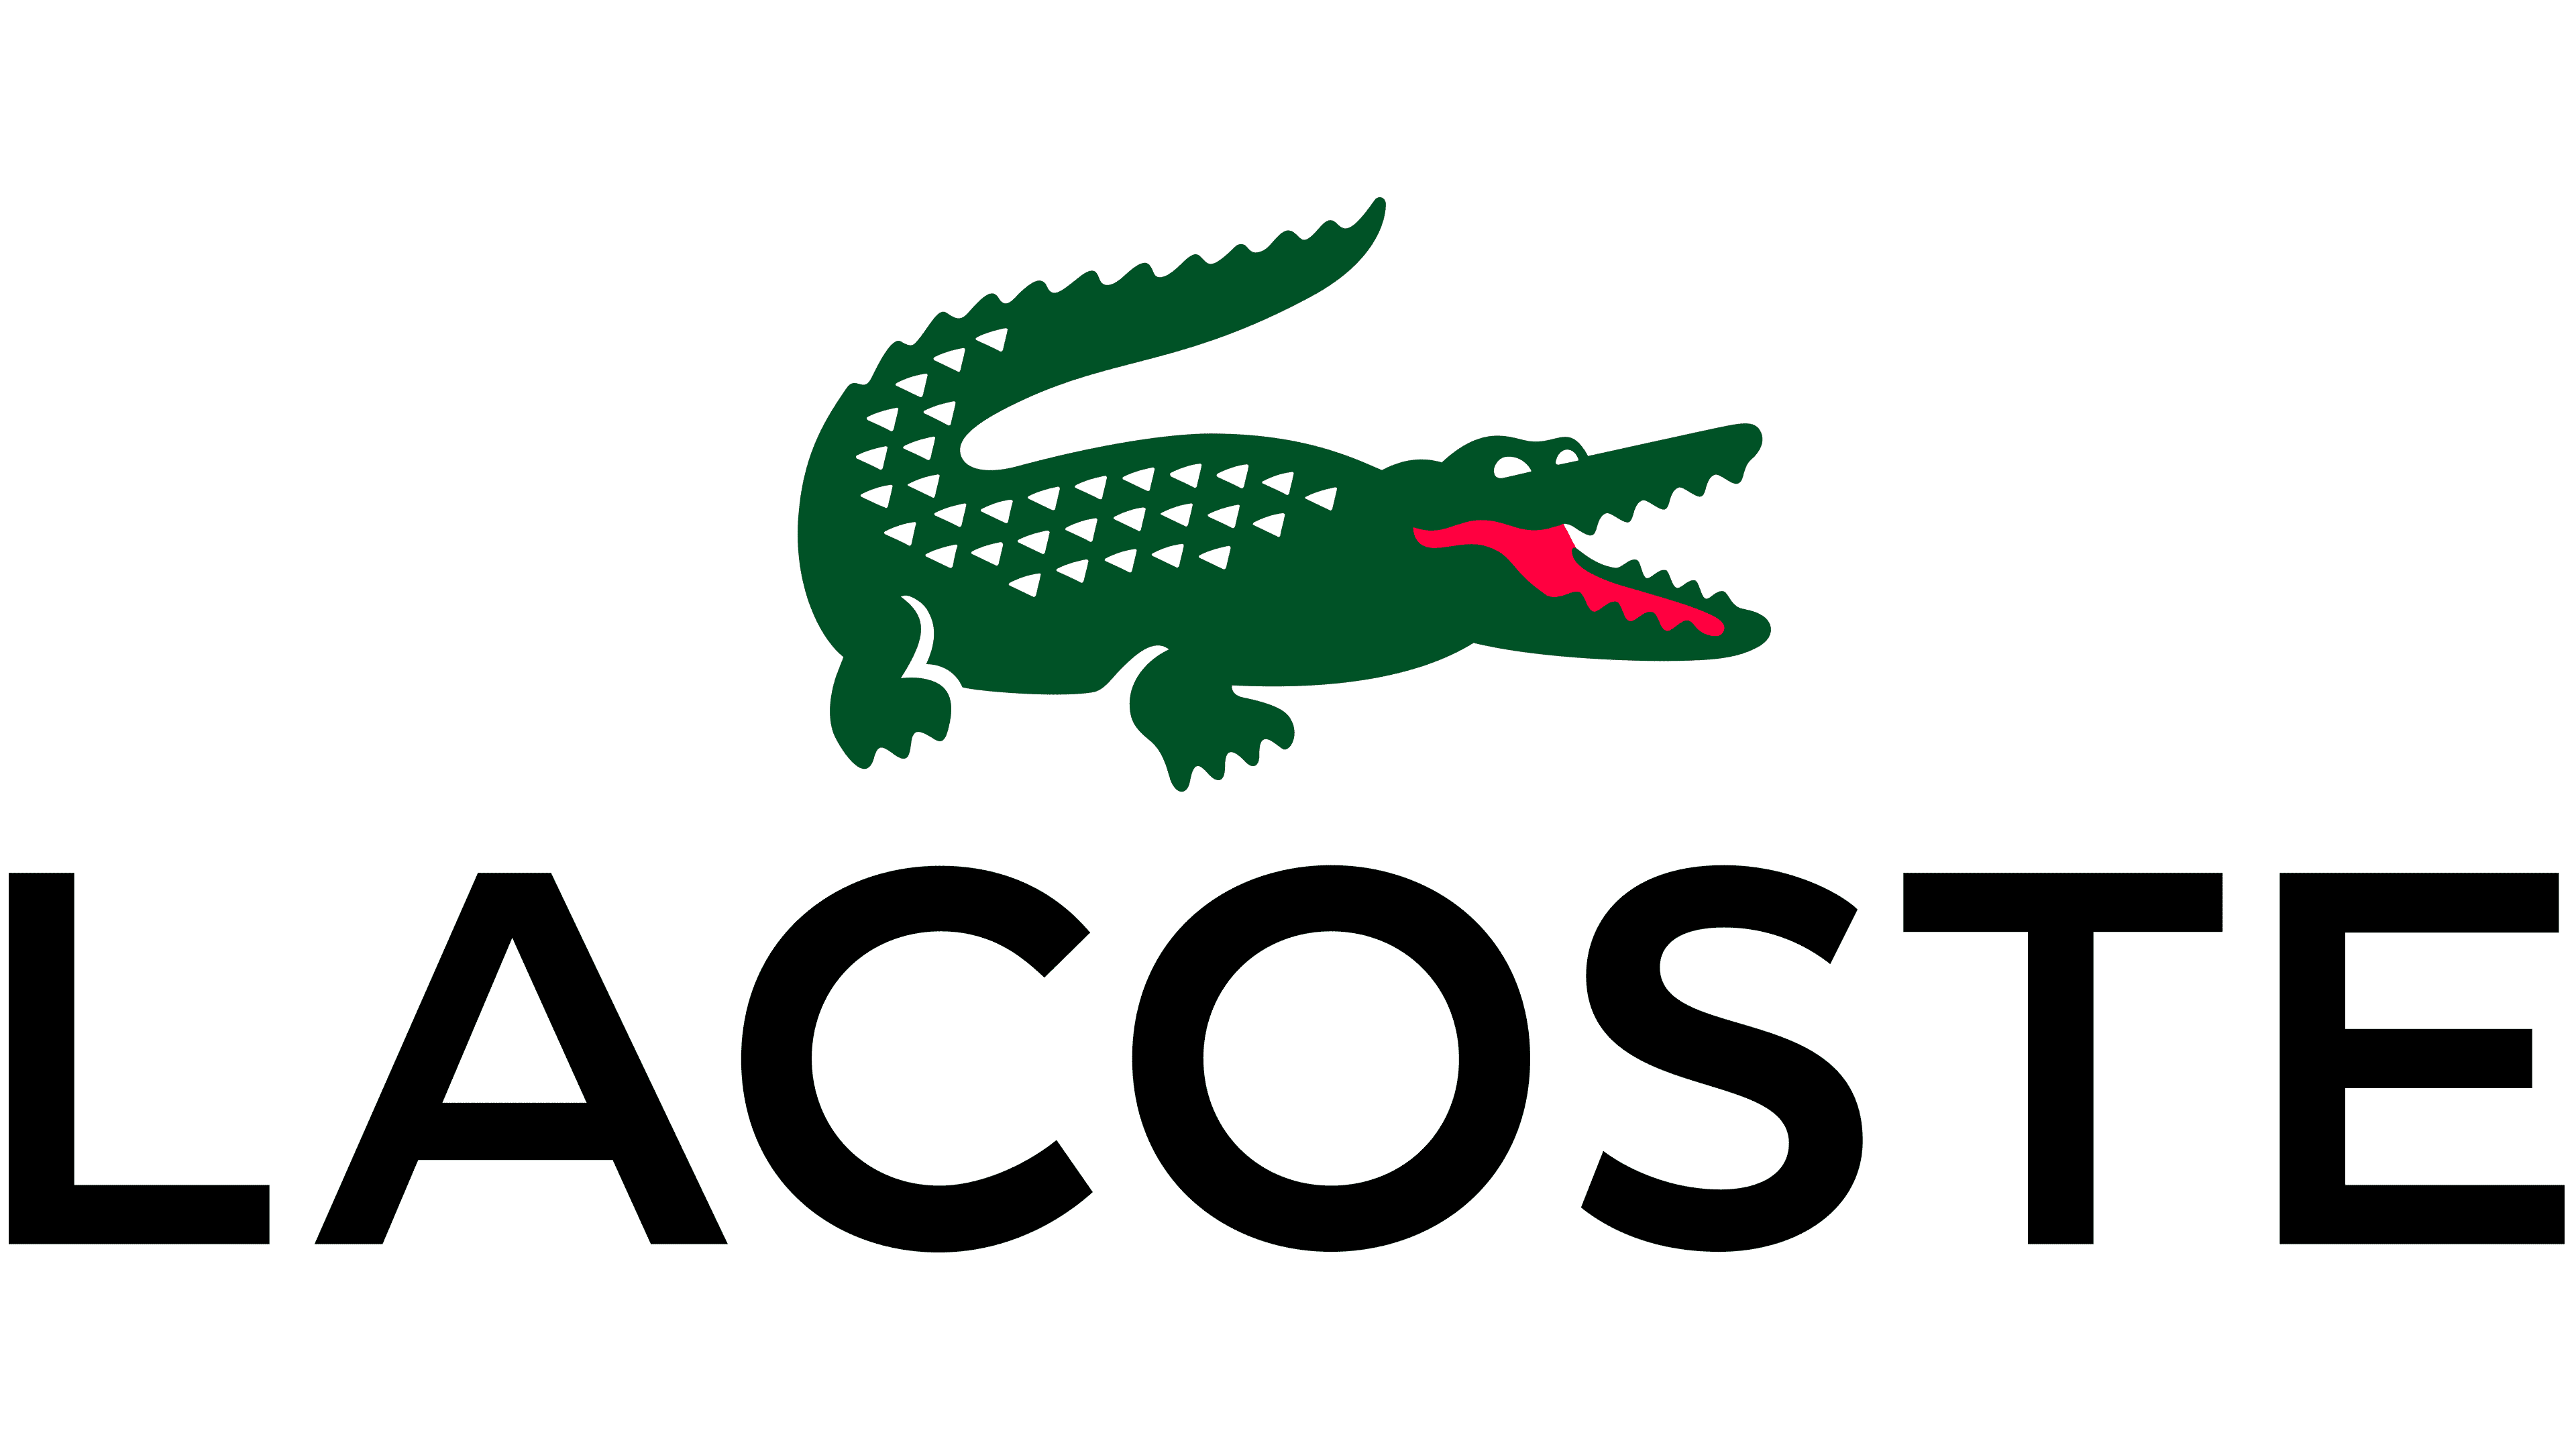 Logo de marcas famosas: Lacoste Logo - Significado, História e PNG